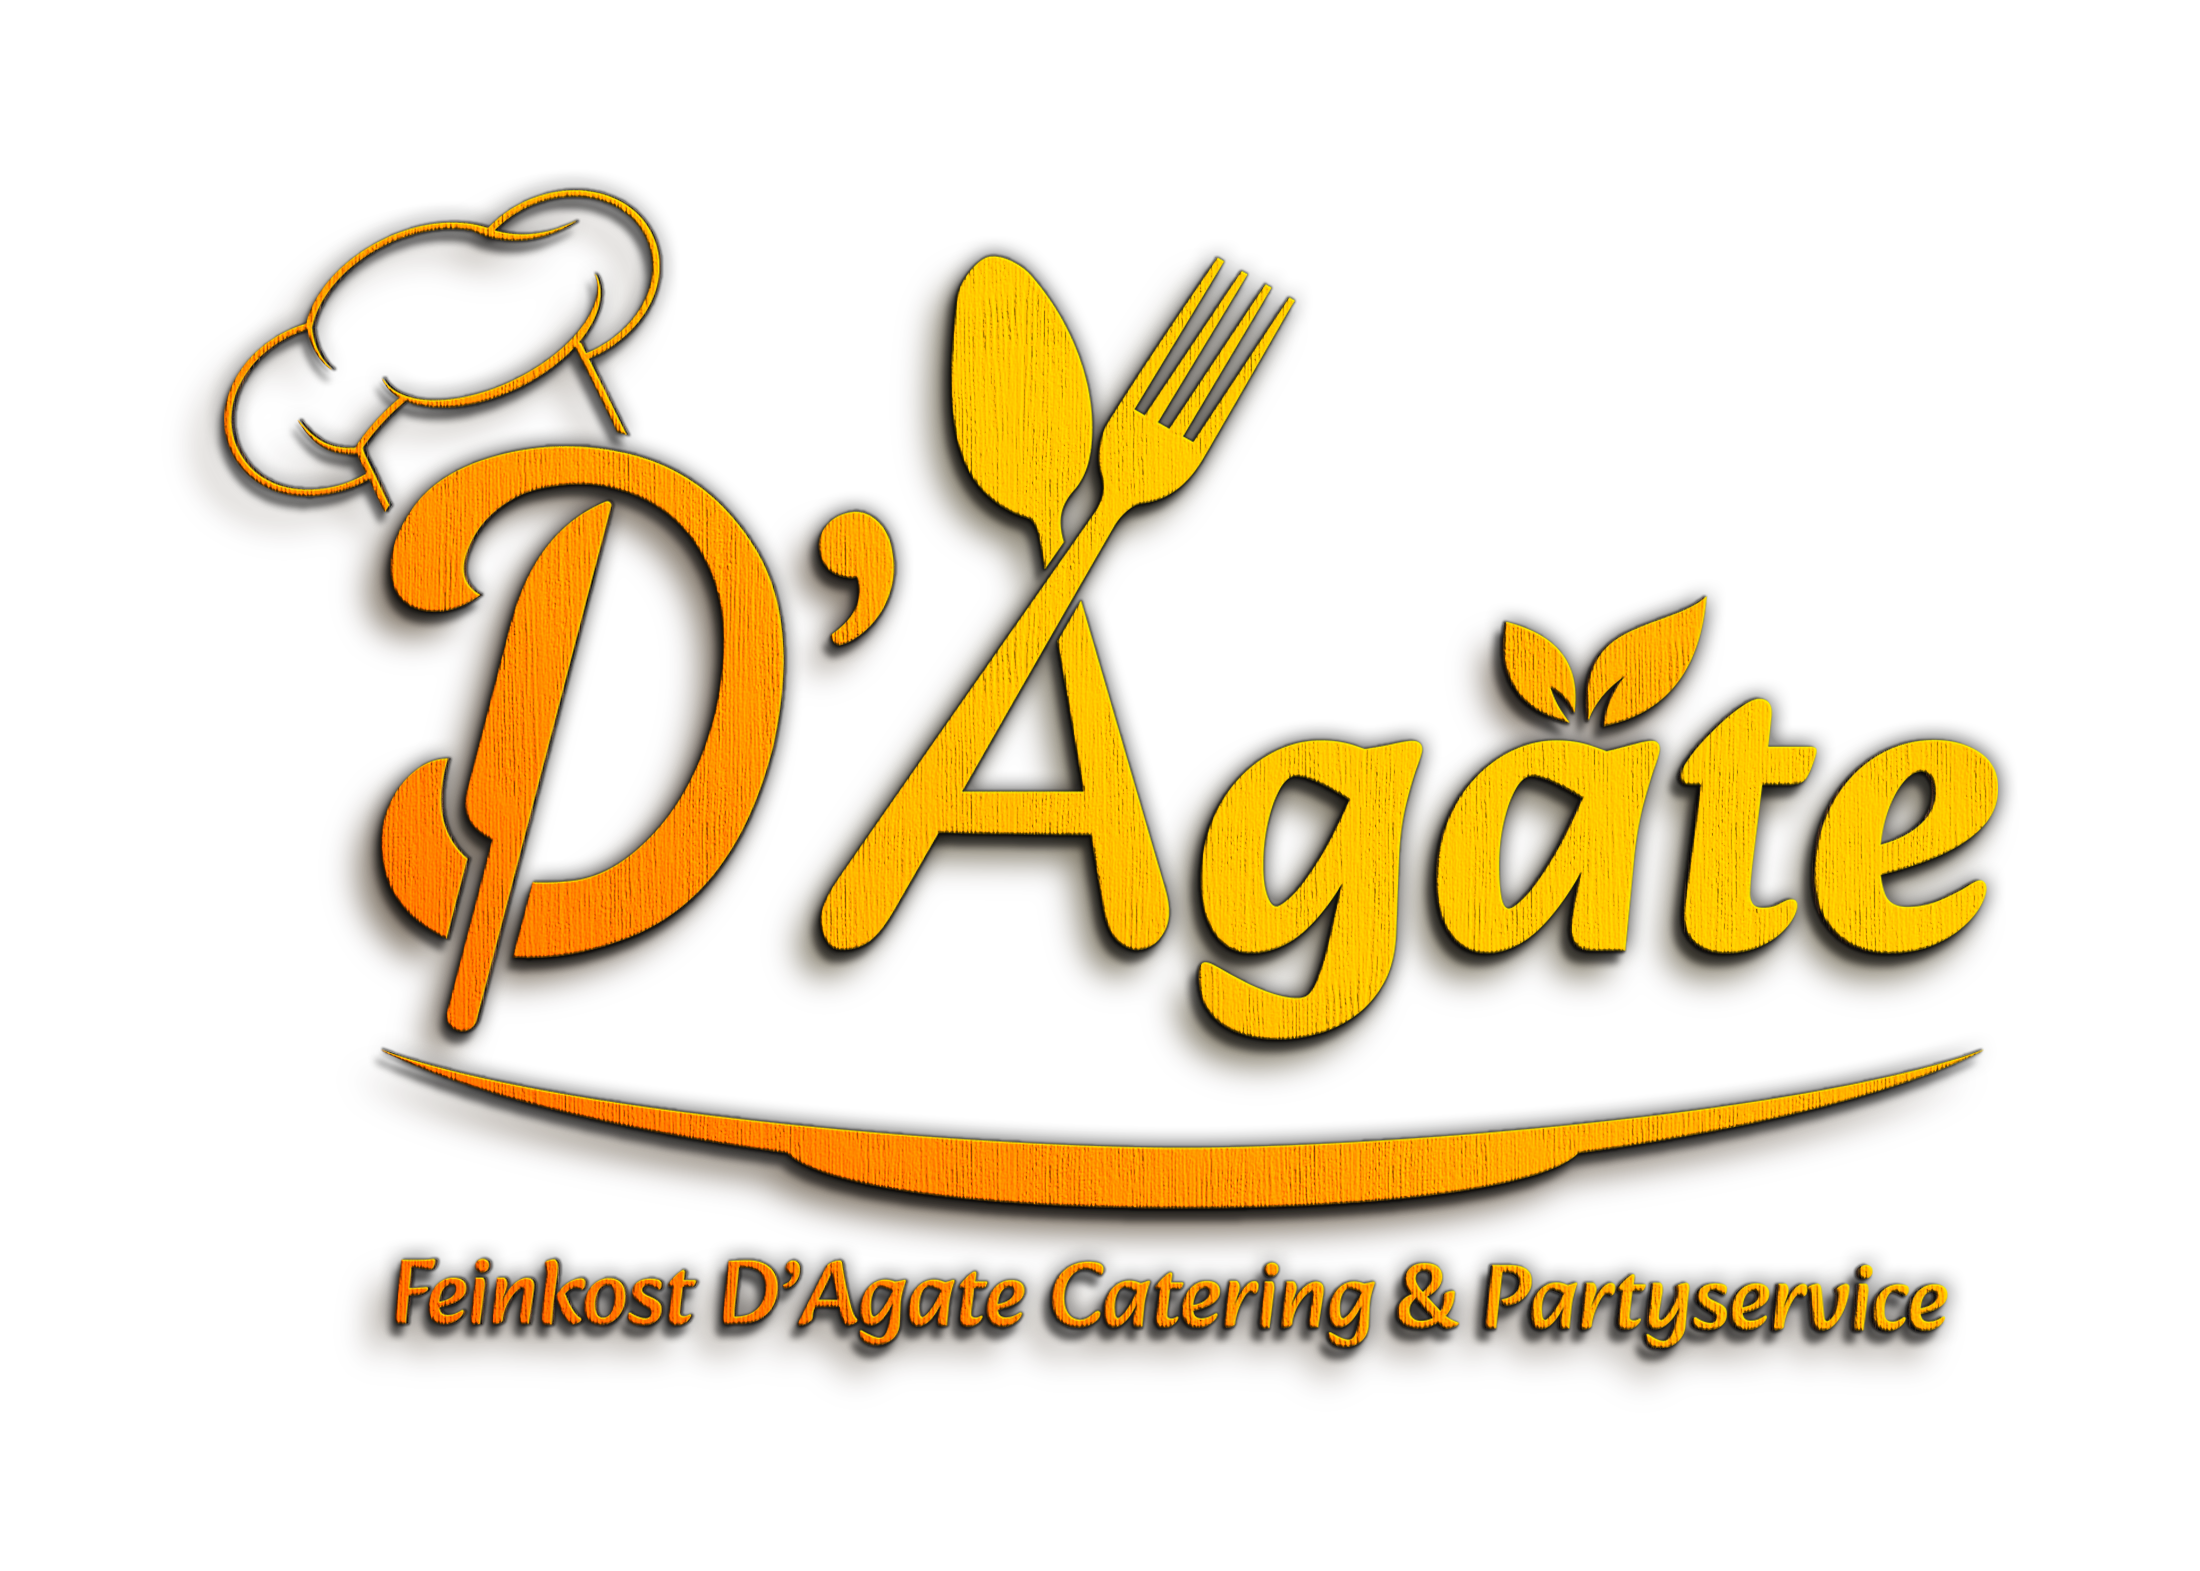 D’Agate Feinkost – Catering-Hamburgs erste Adresse für exklusive Antipasti